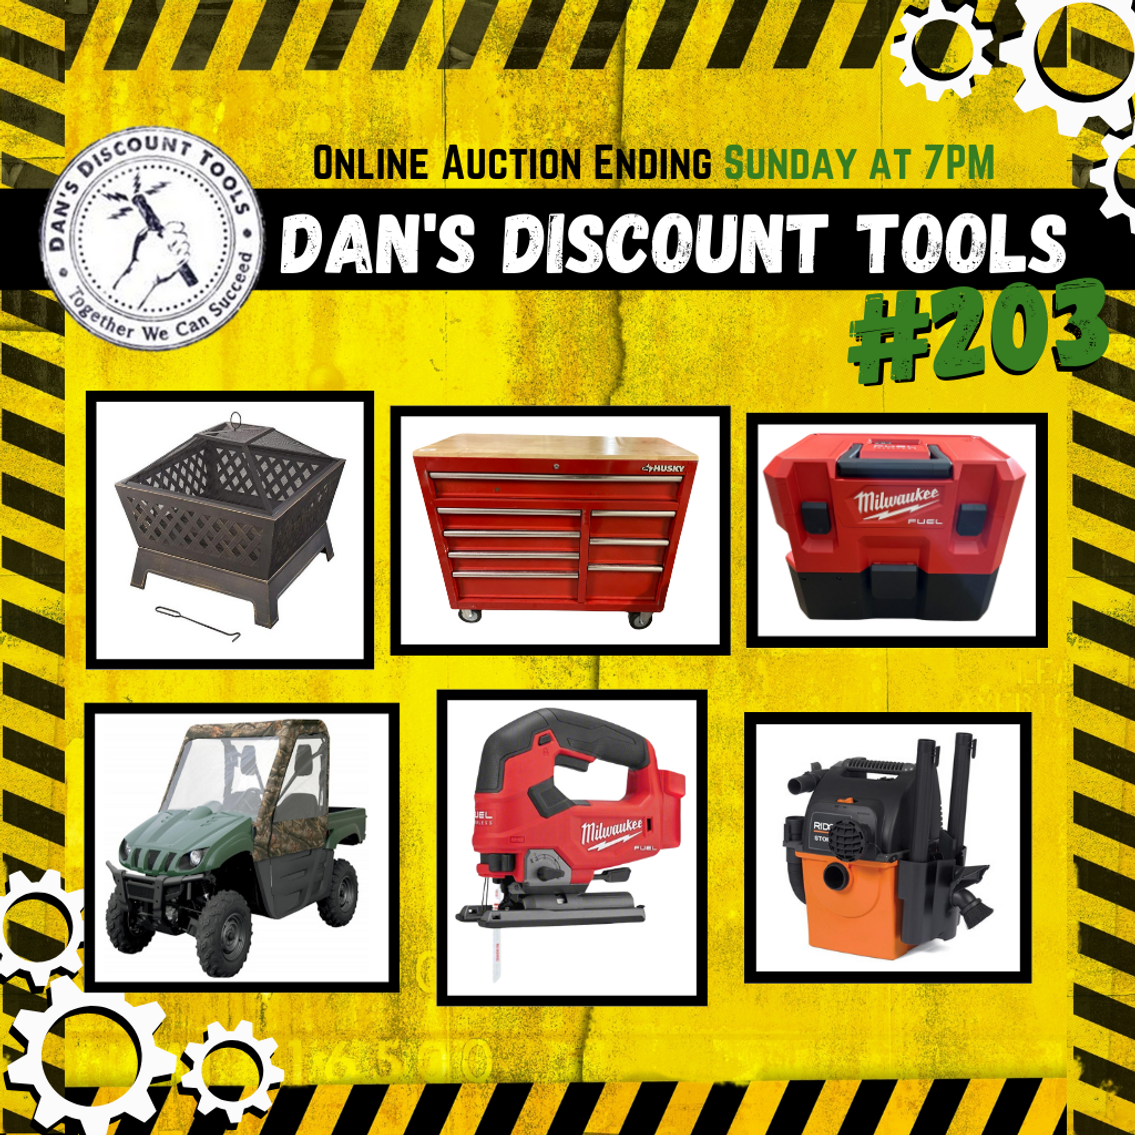 Dan's Discount Tools #203